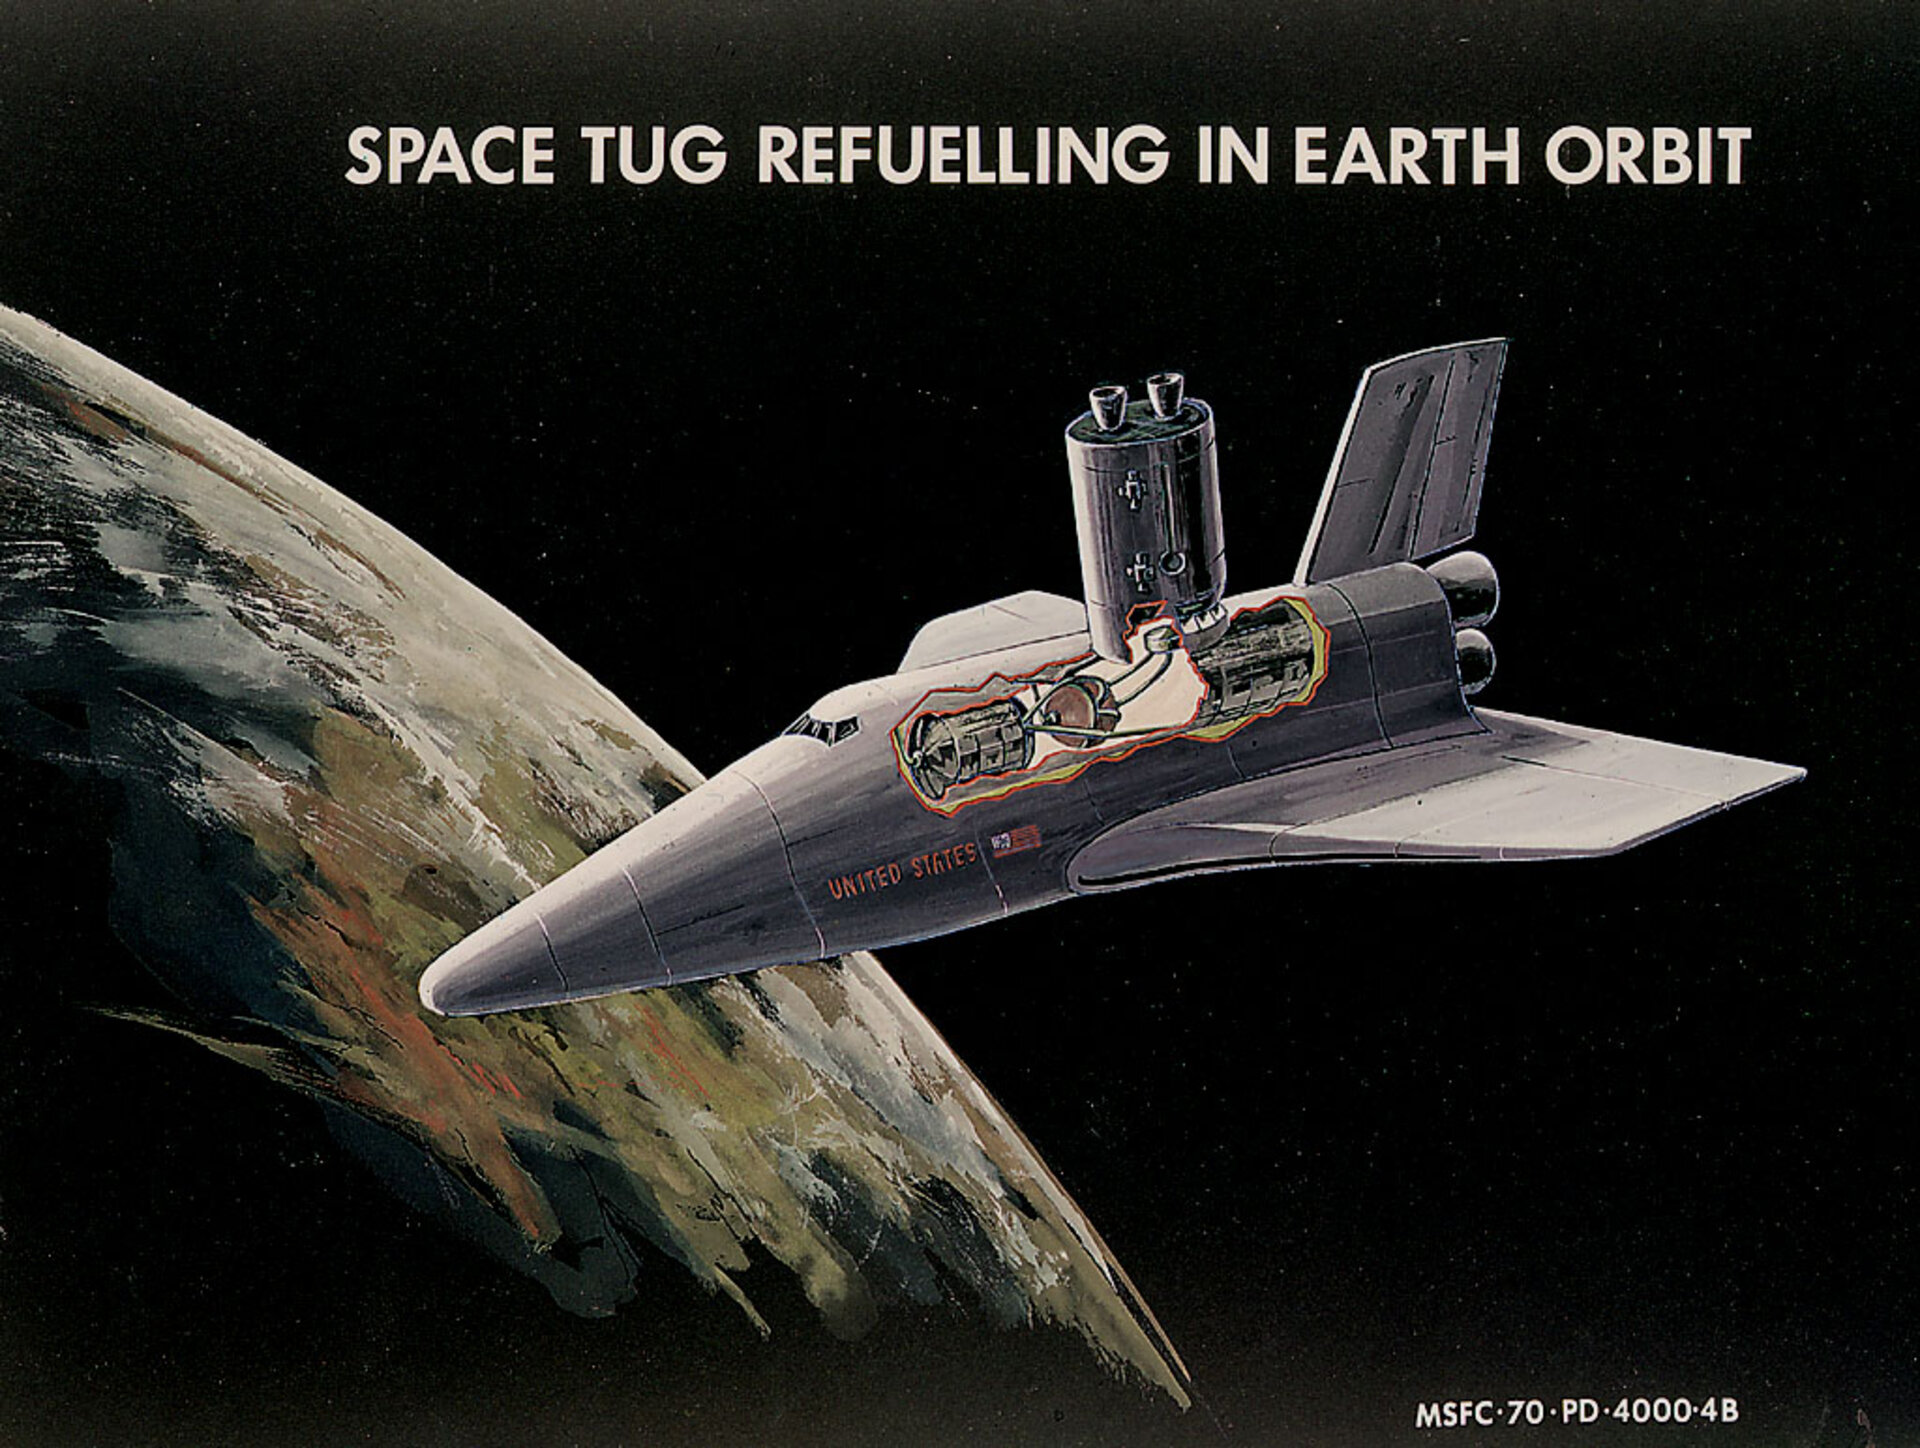 Space Tug refuelling in Earth orbit